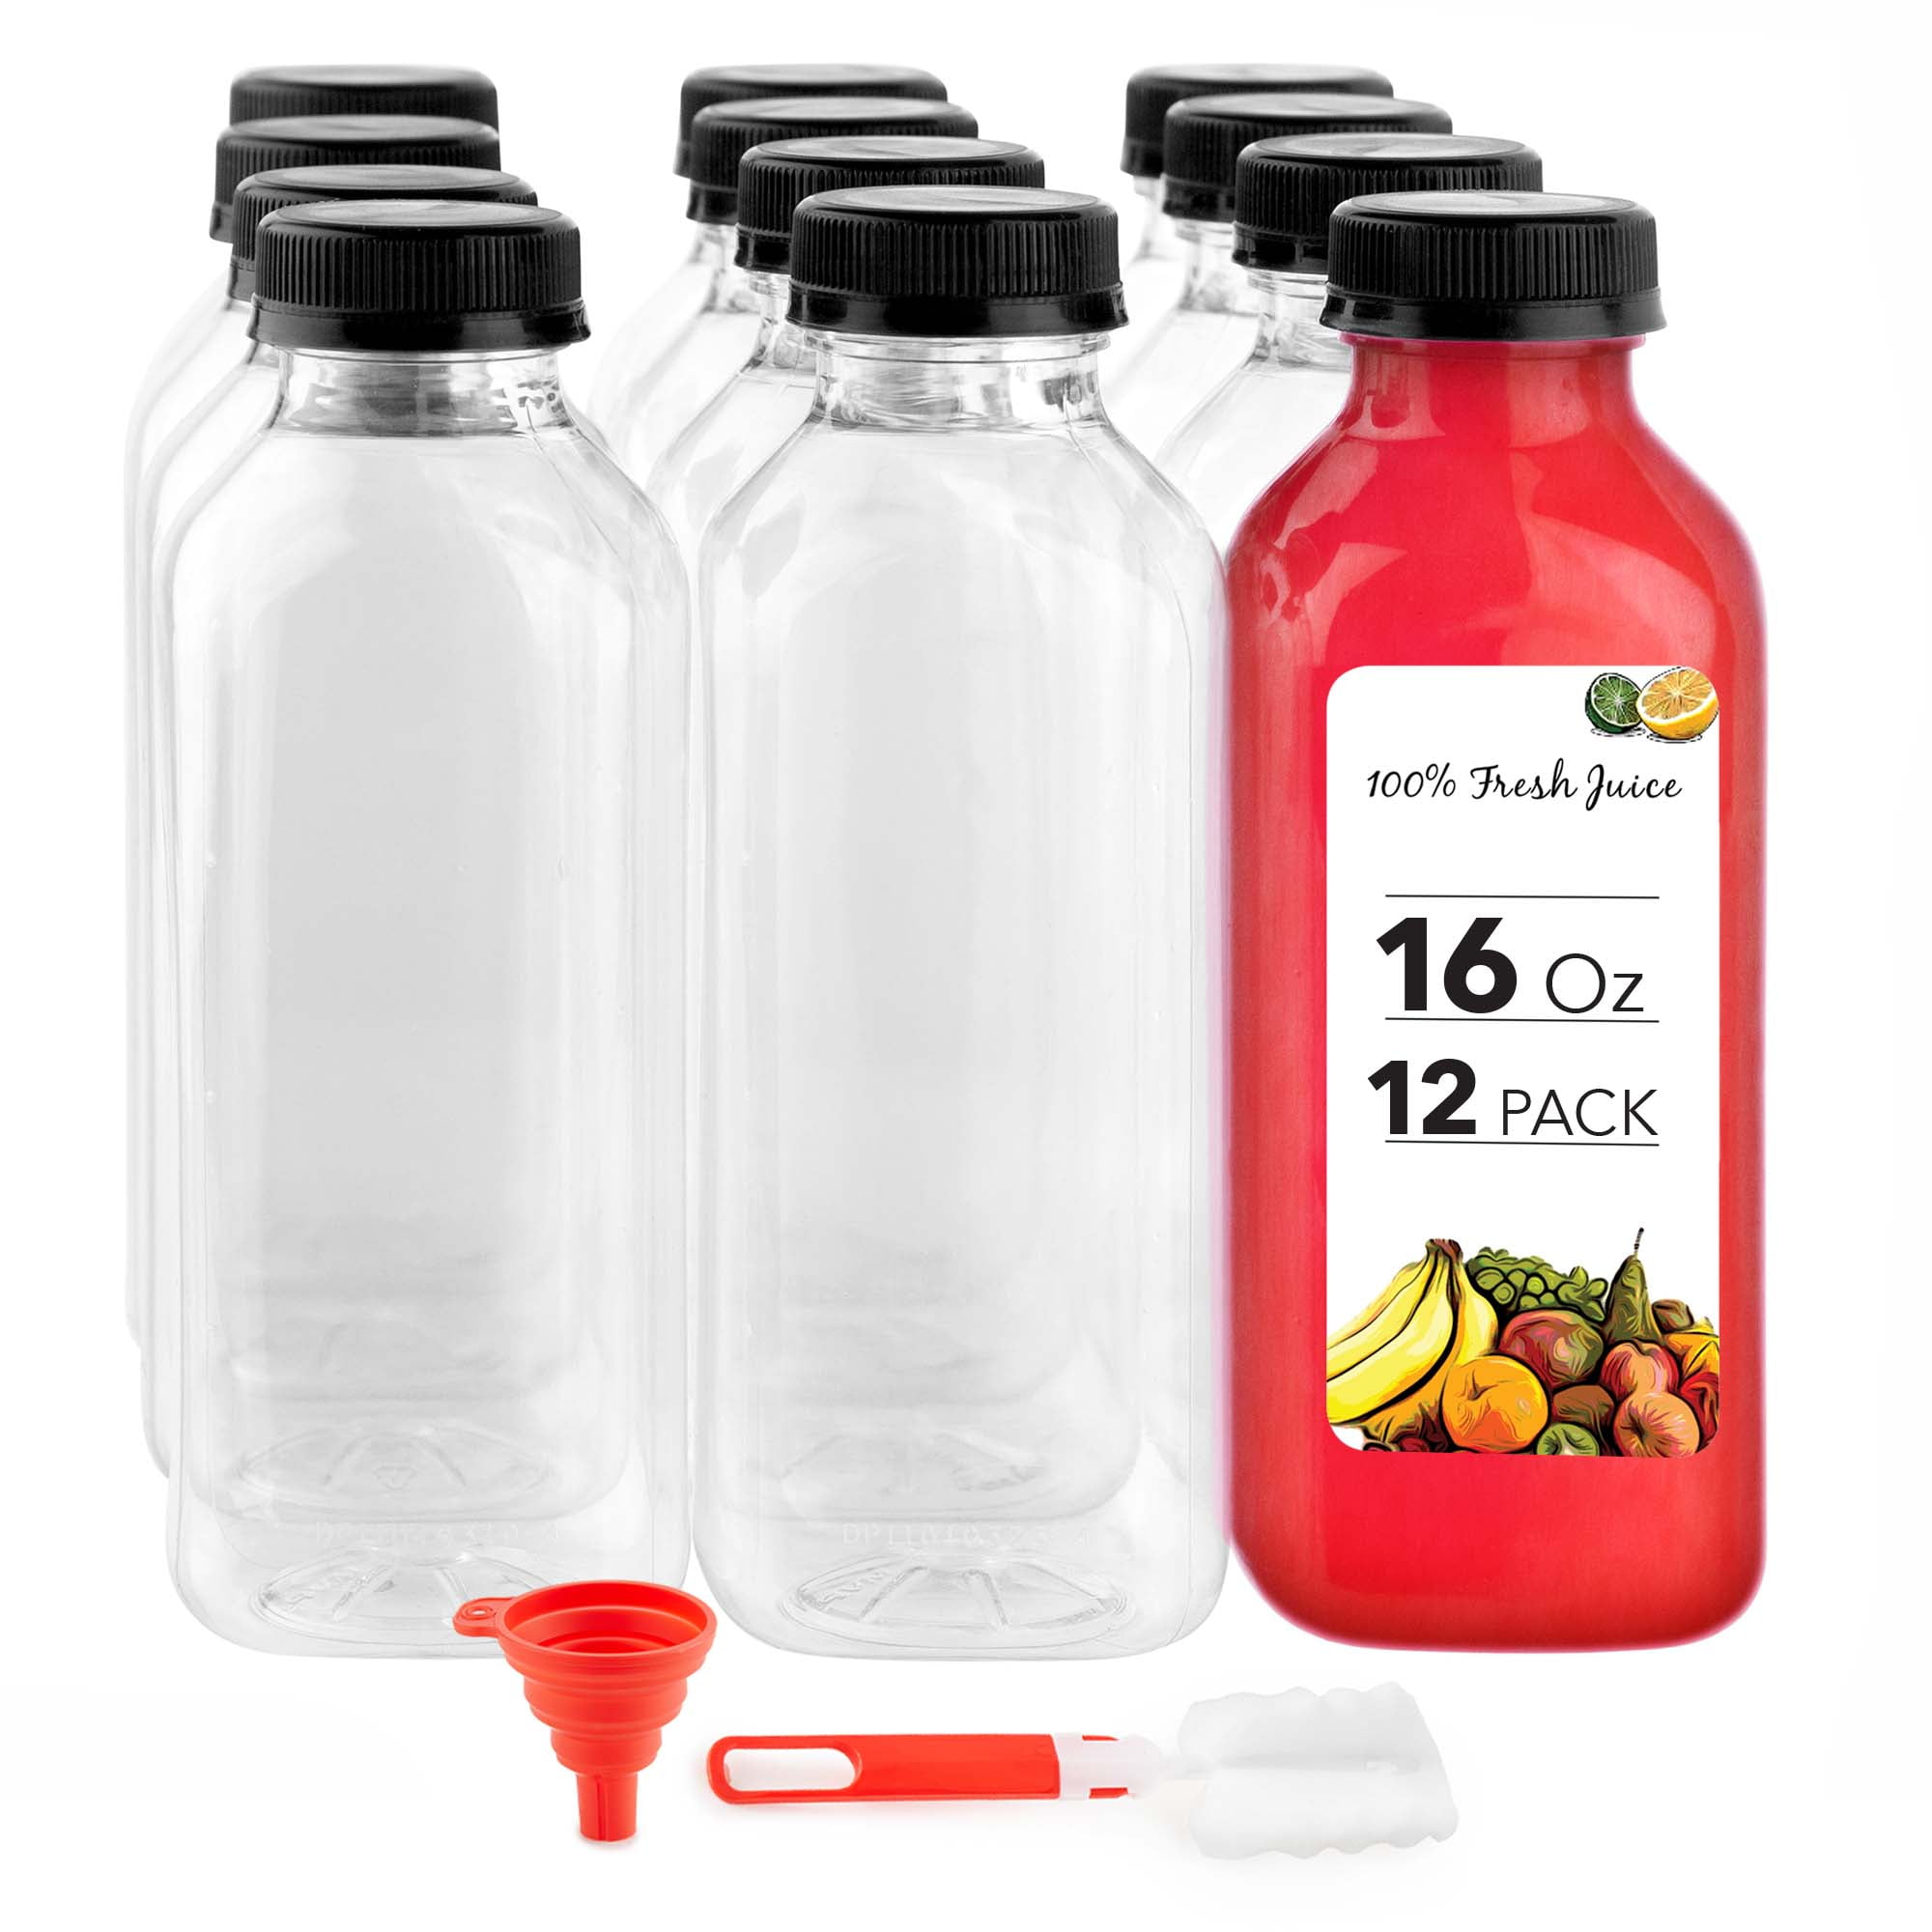 4 Ounce Mini Bottles for Mini Fridge, Reusable Juice Containers